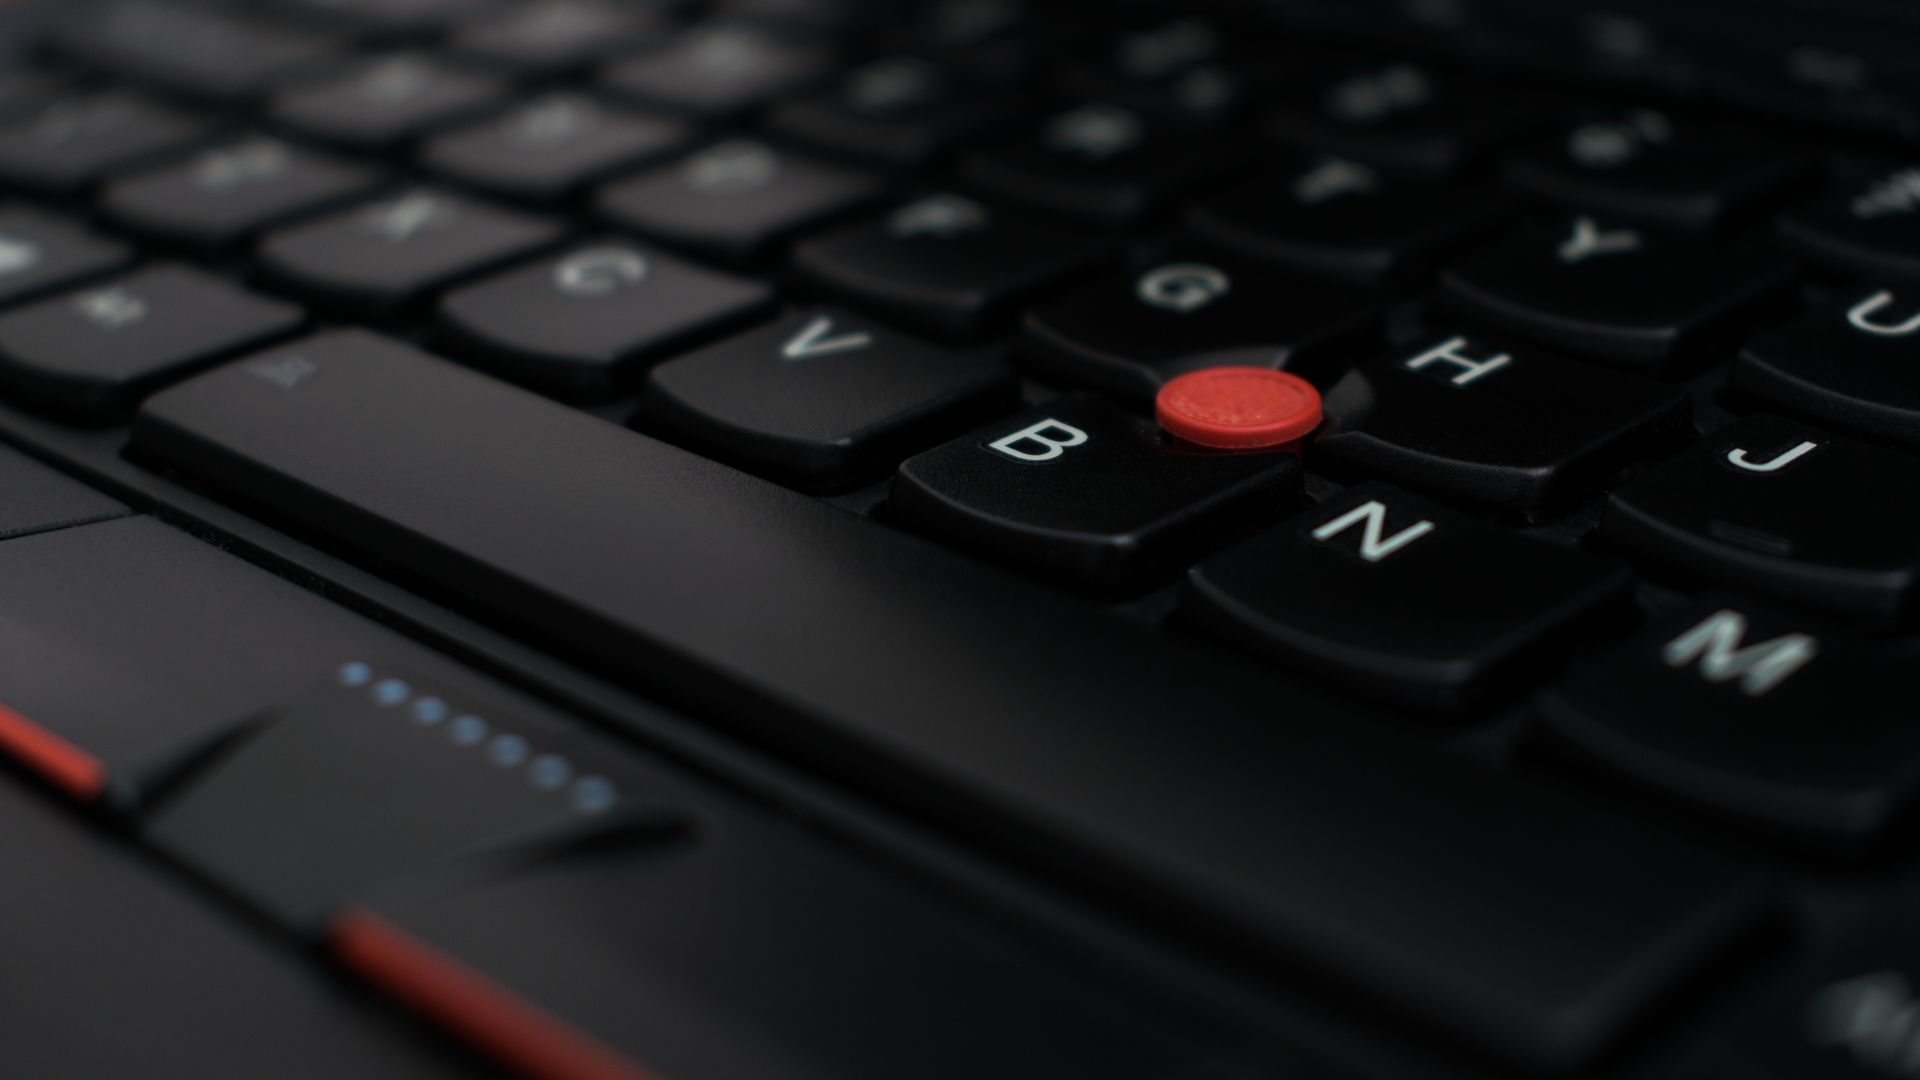 Hardware-Keylogger - Behind the Keyboard